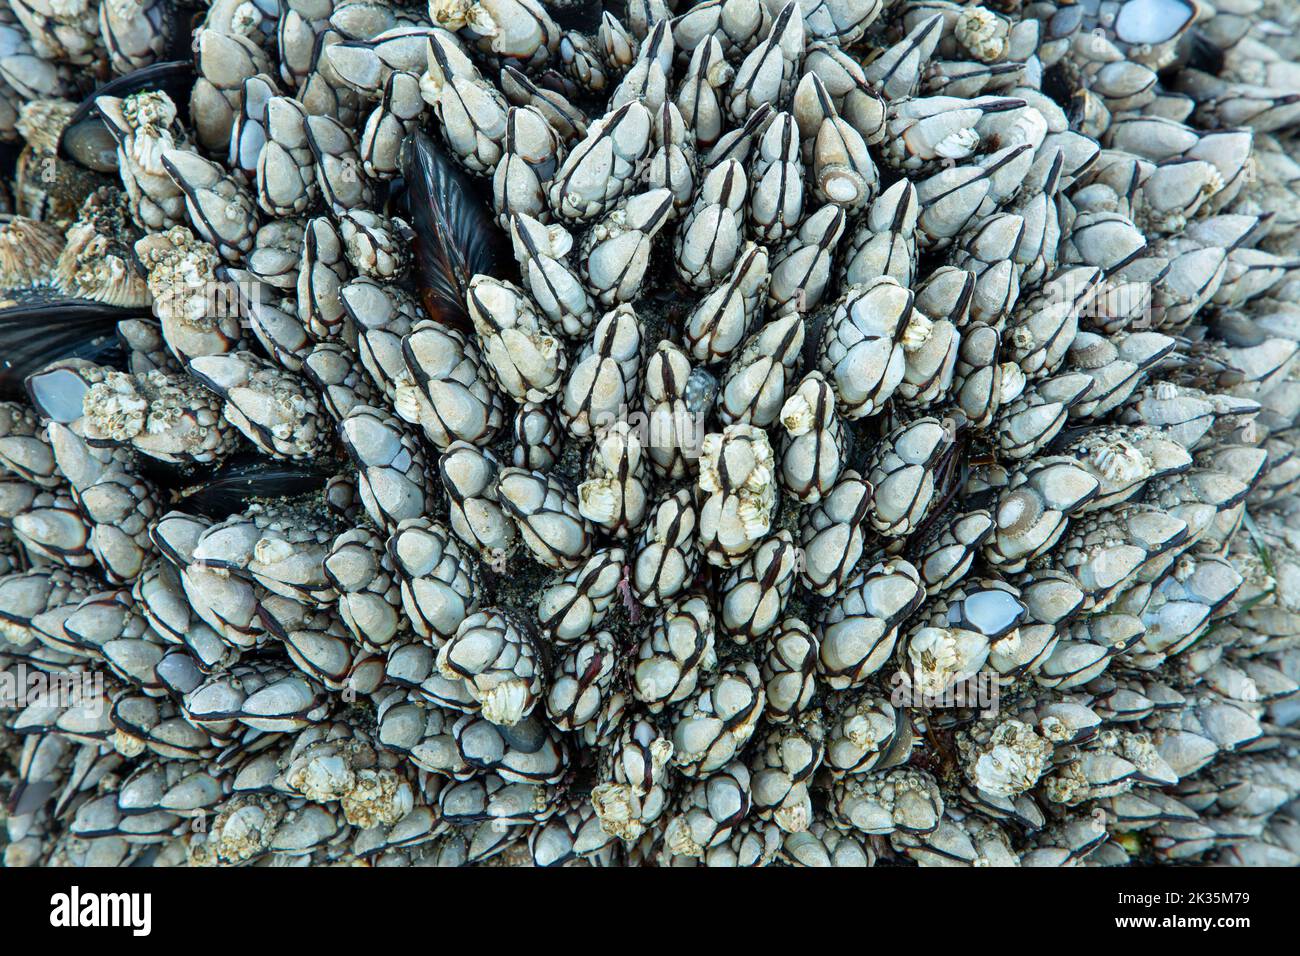 Gooseneck barnacles at Shi Shi Beach, Olympic National Park, Washington Stock Photo